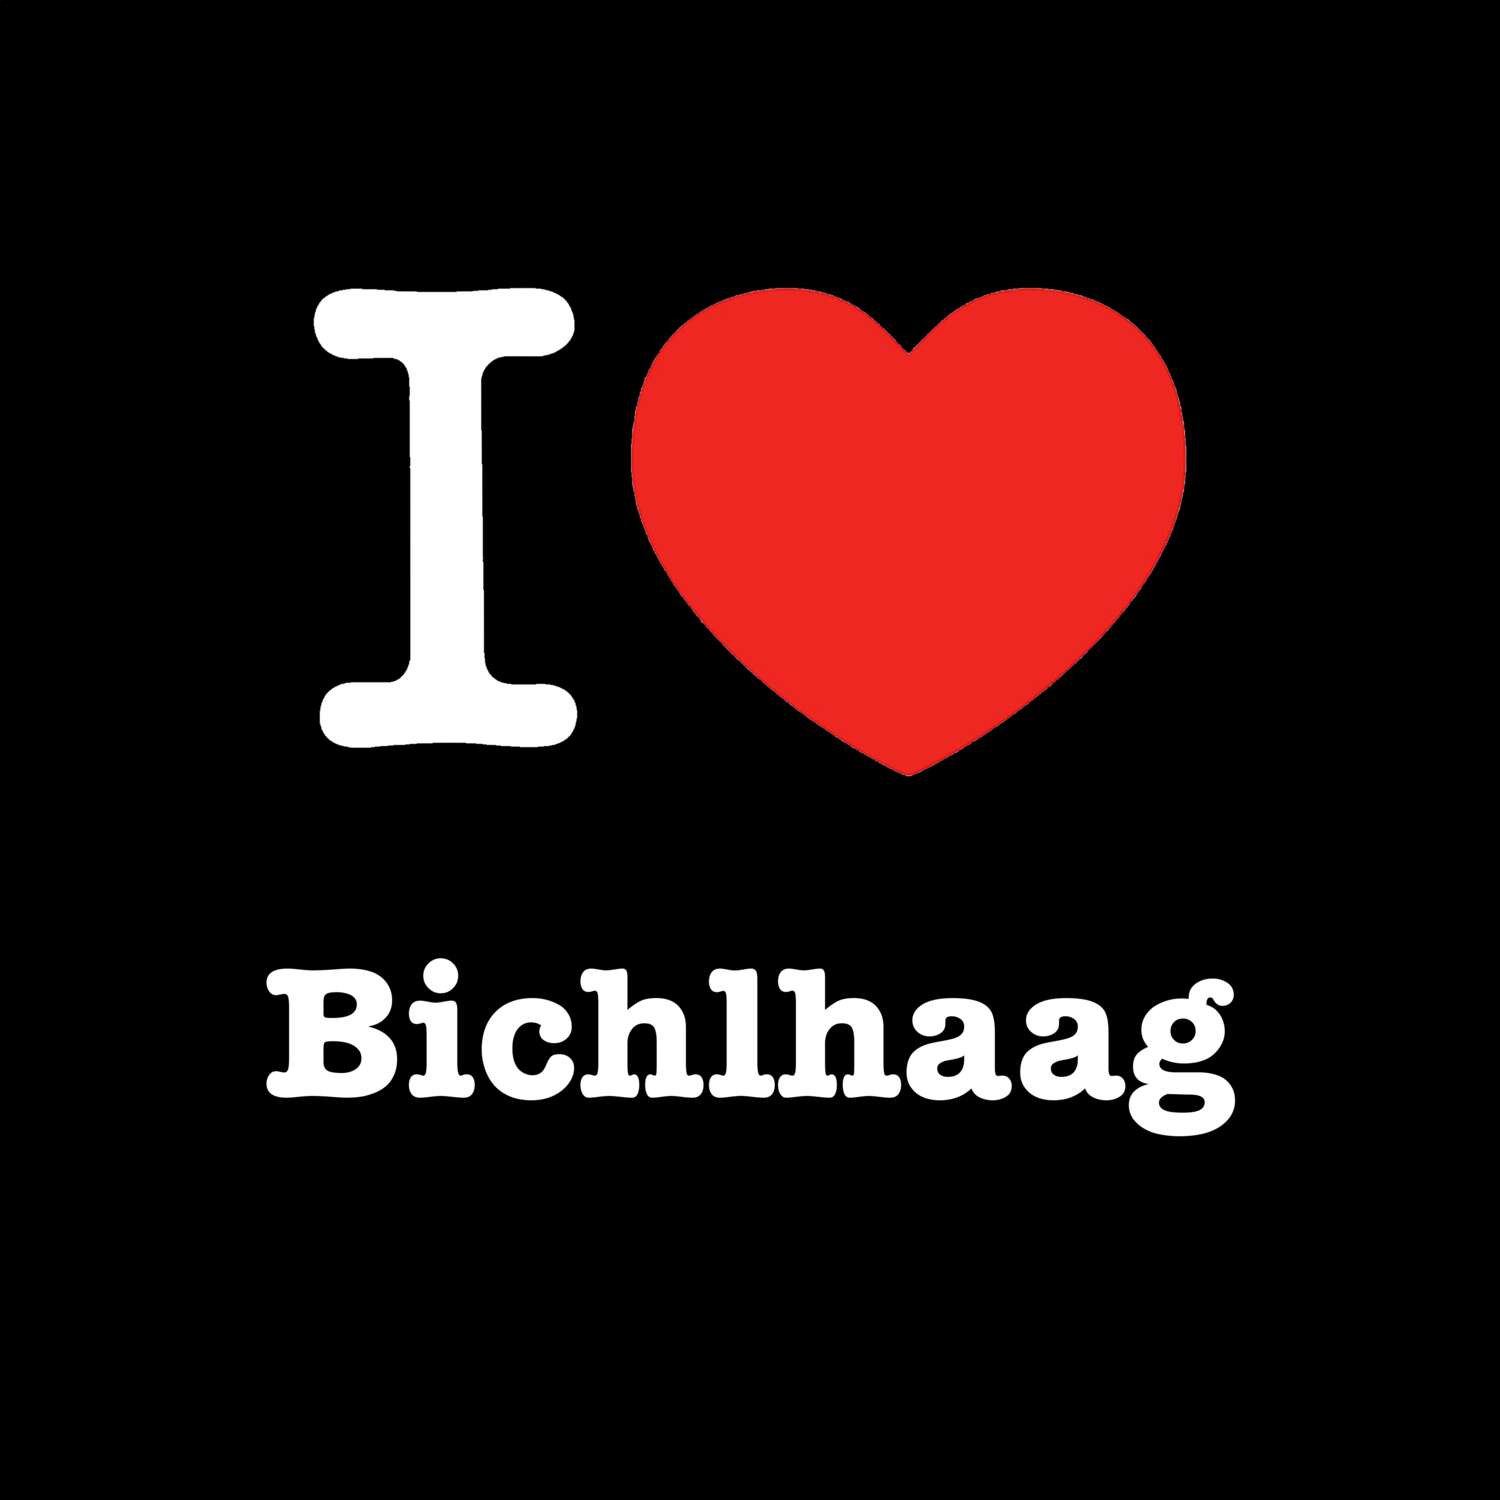 Bichlhaag T-Shirt »I love«